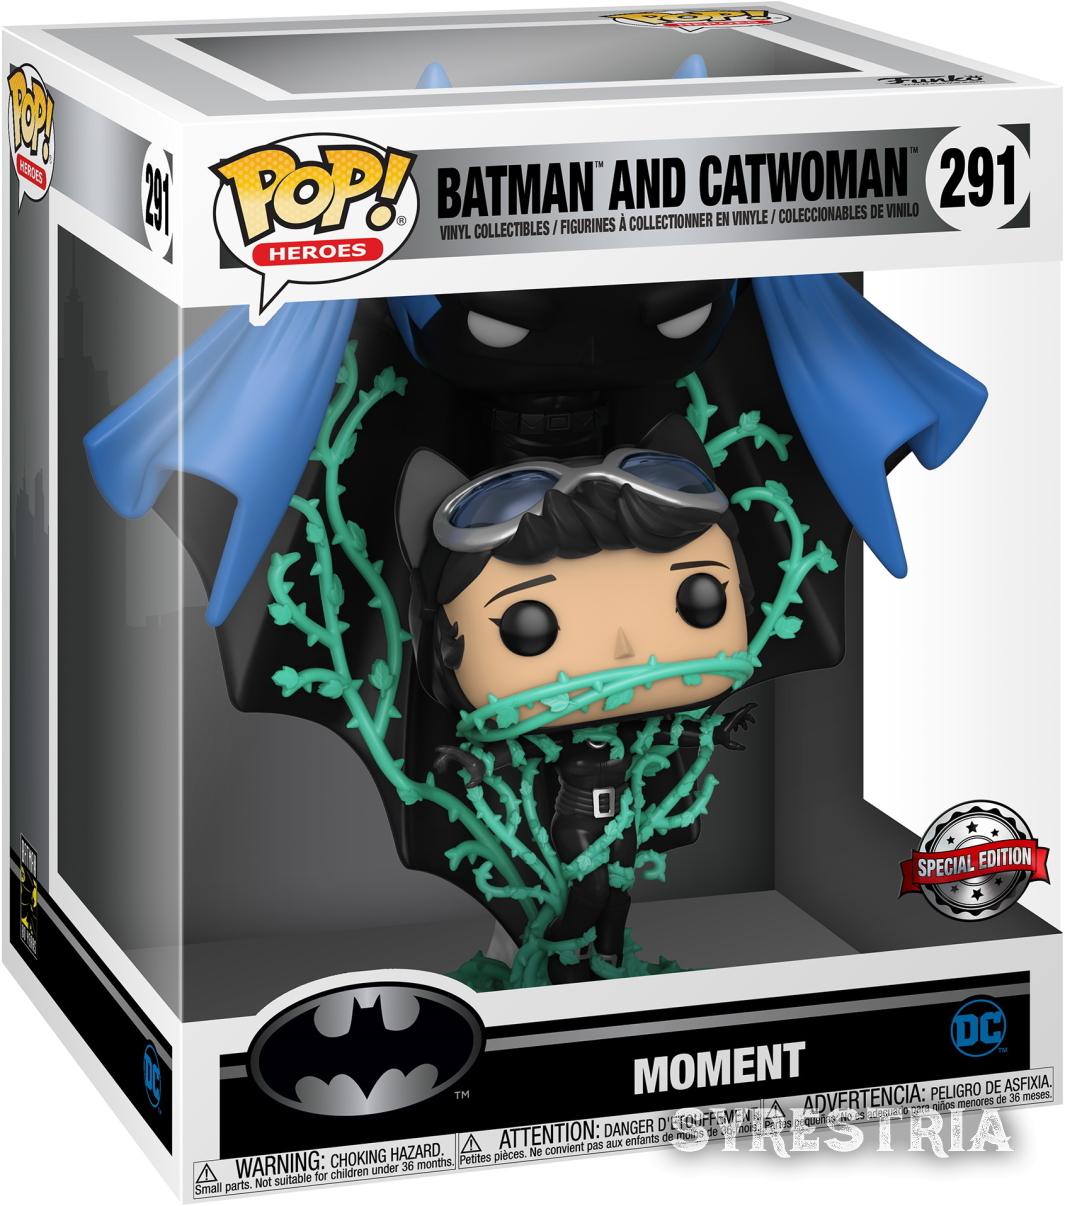 Batman and Catwoman - Moment 291 Special Edition - Funko Pop! - Vinyl Figur